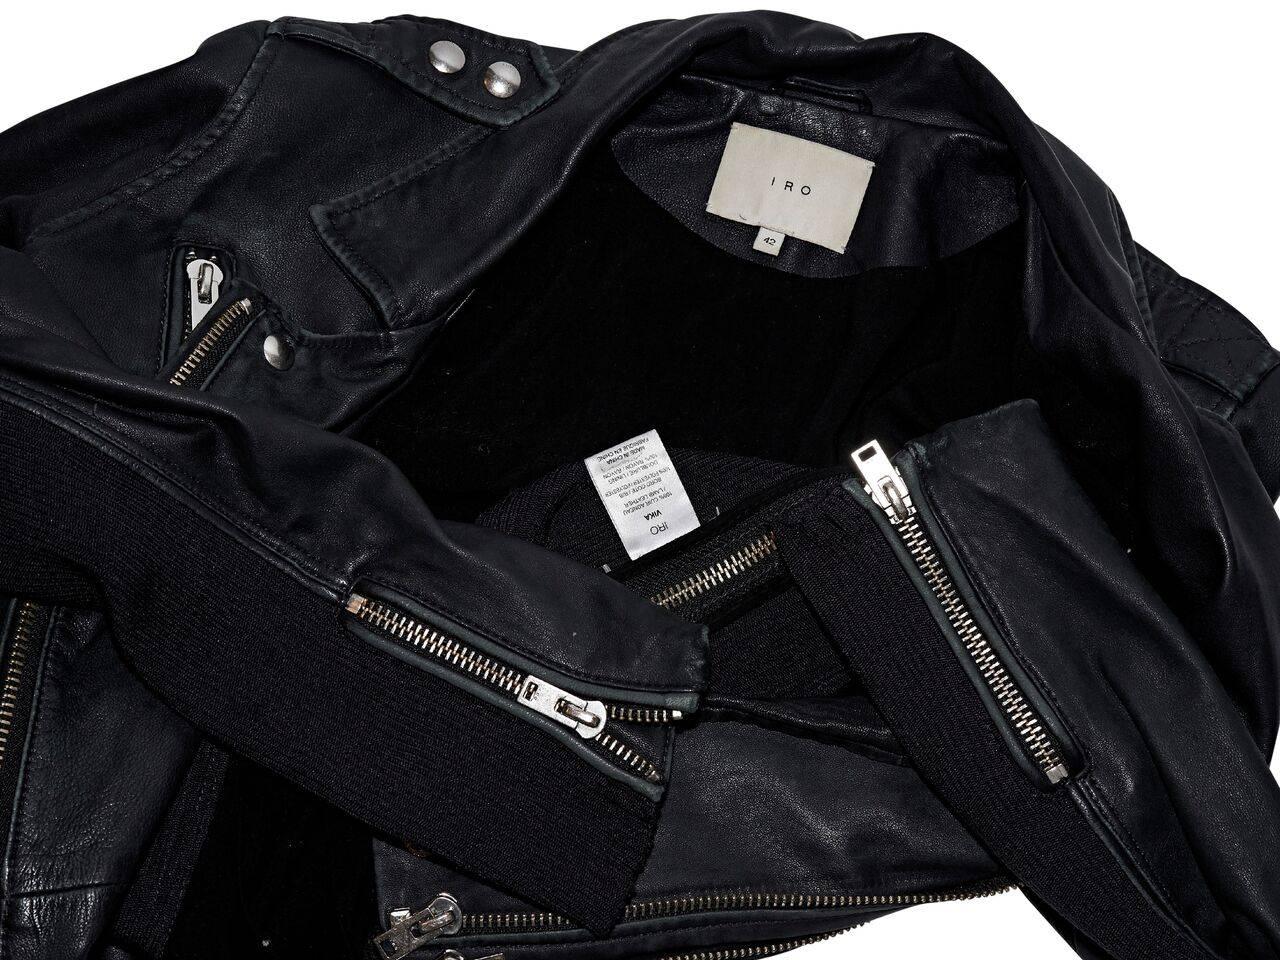 iro leather jacket on sale